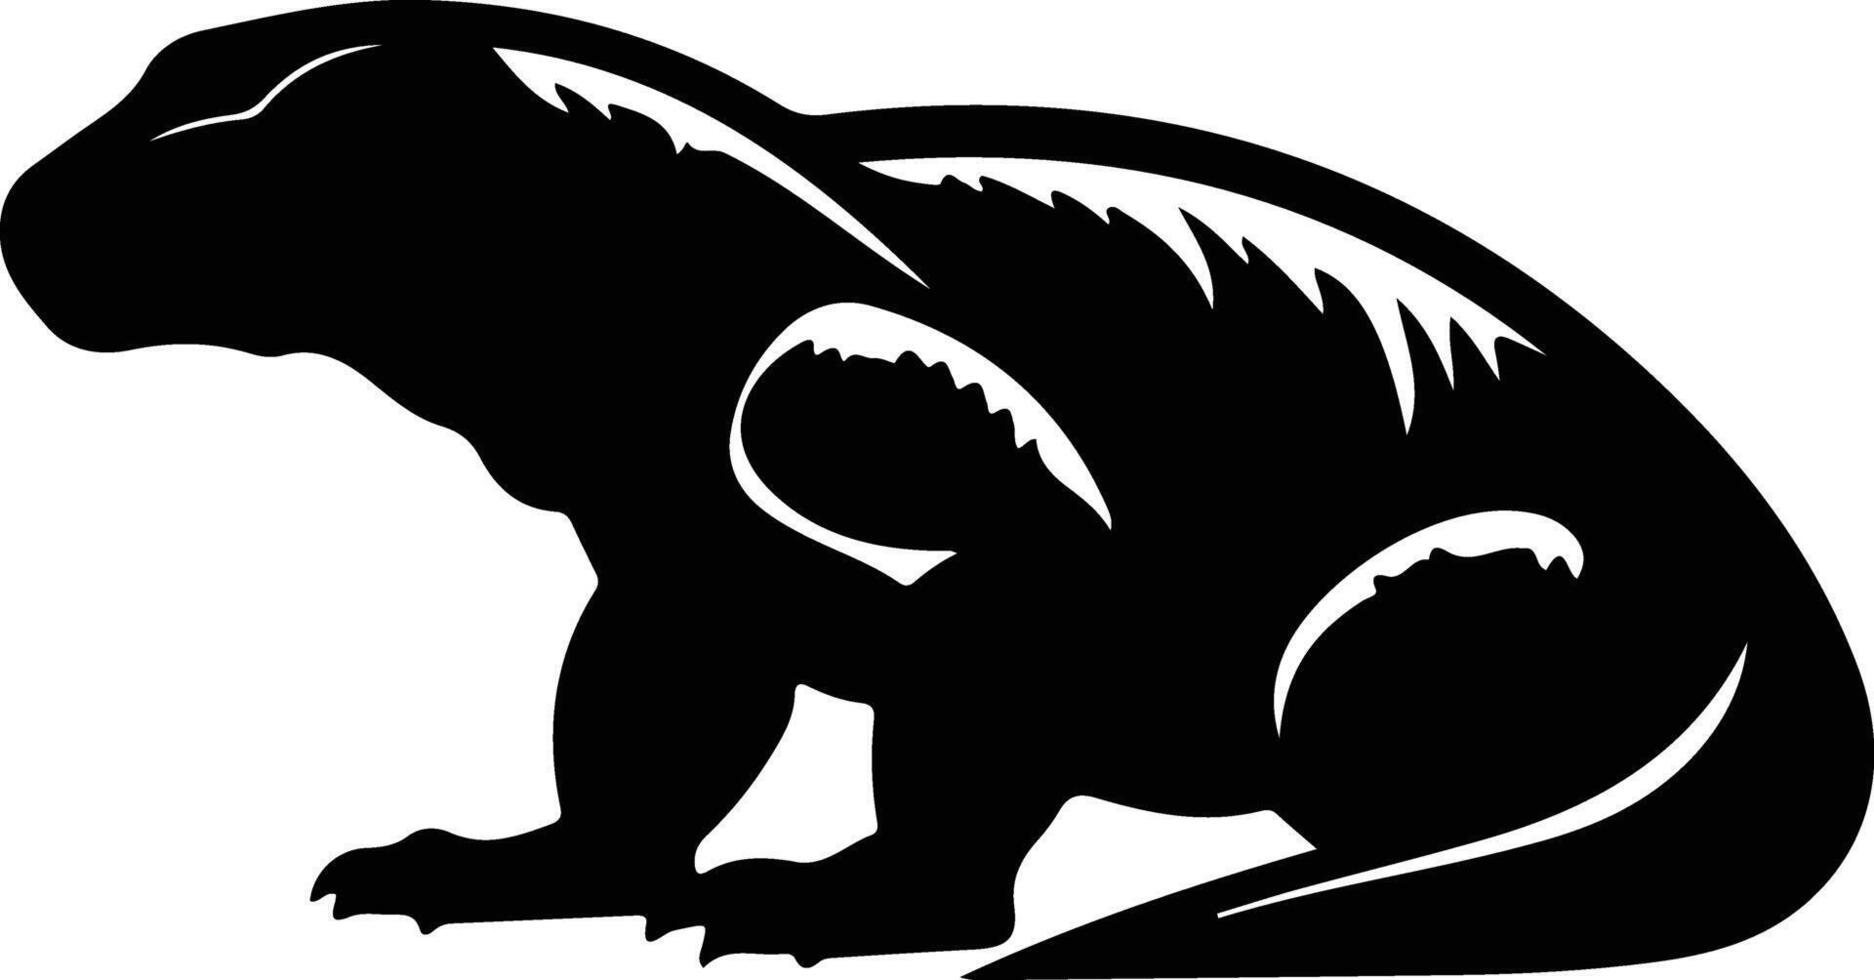 Komodo dragon black silhouette vector